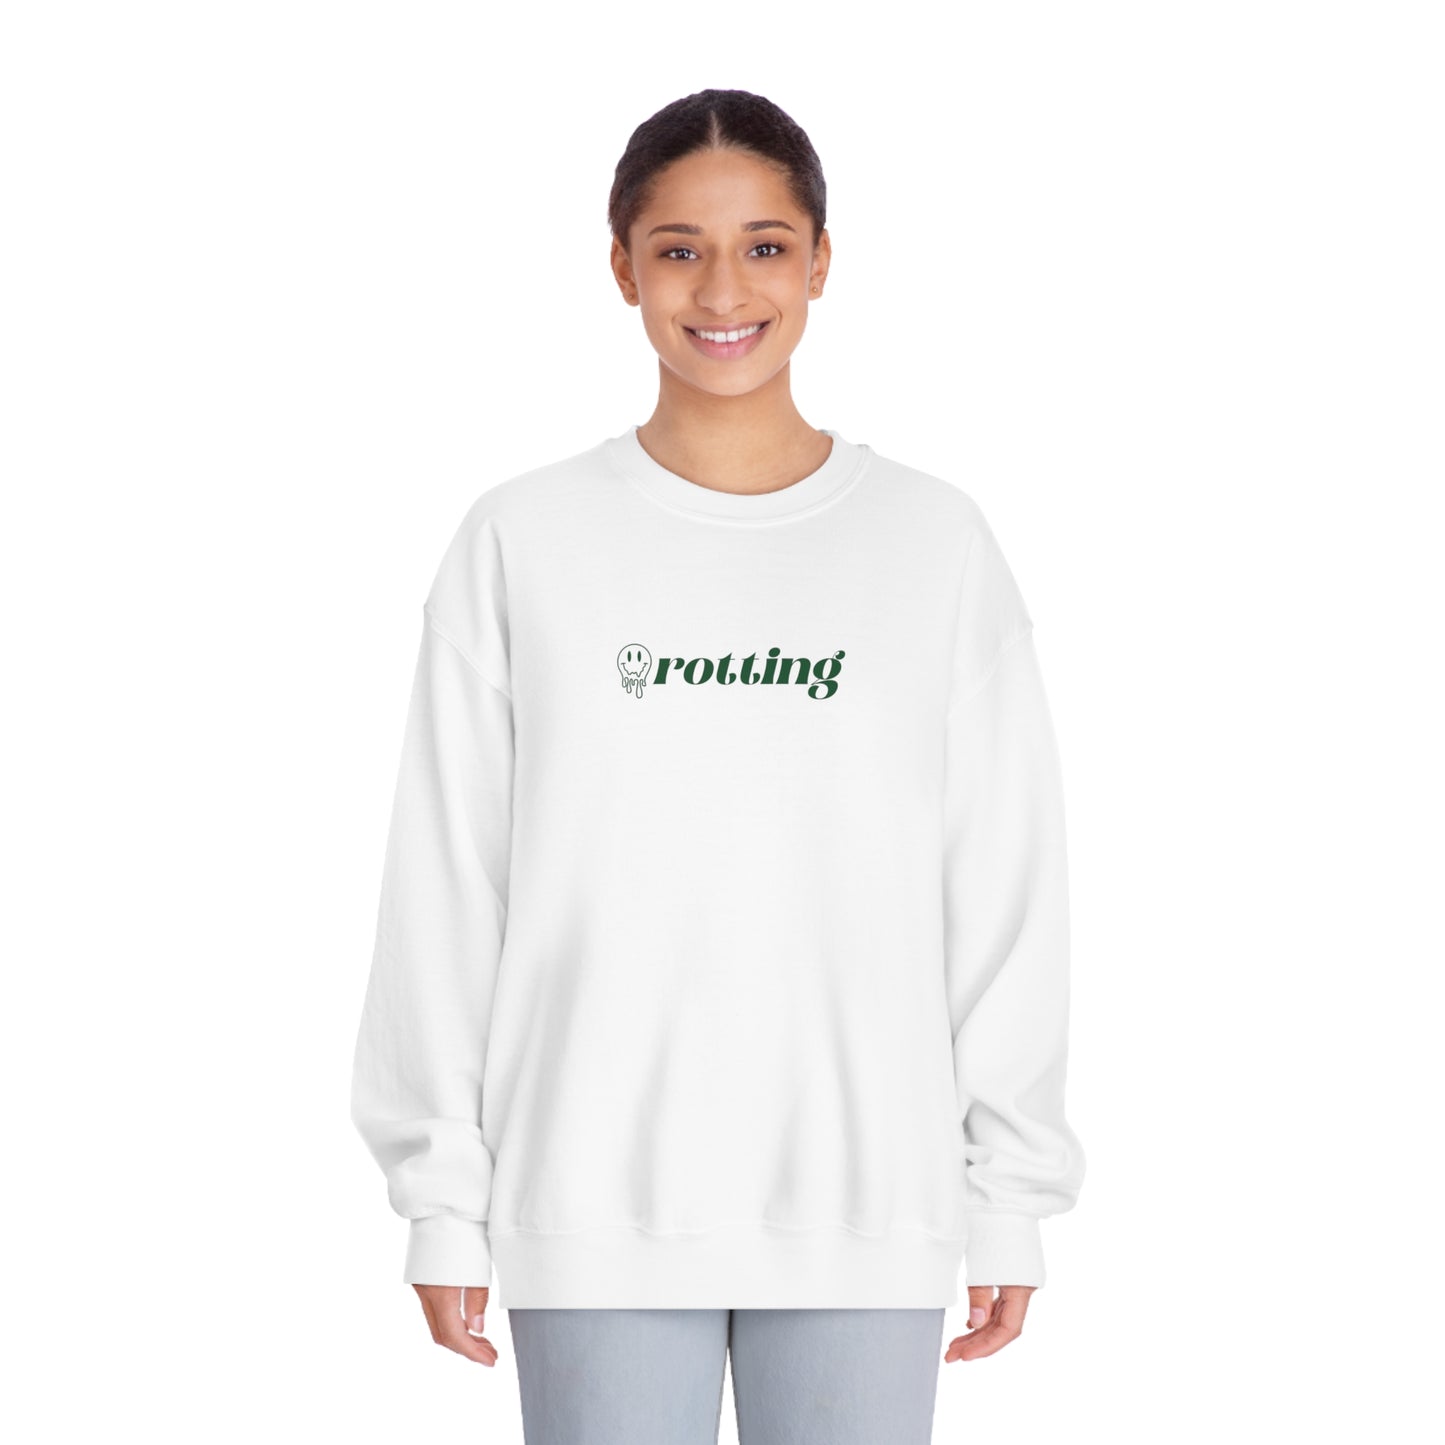 Rotting Crewneck Sweatshirt